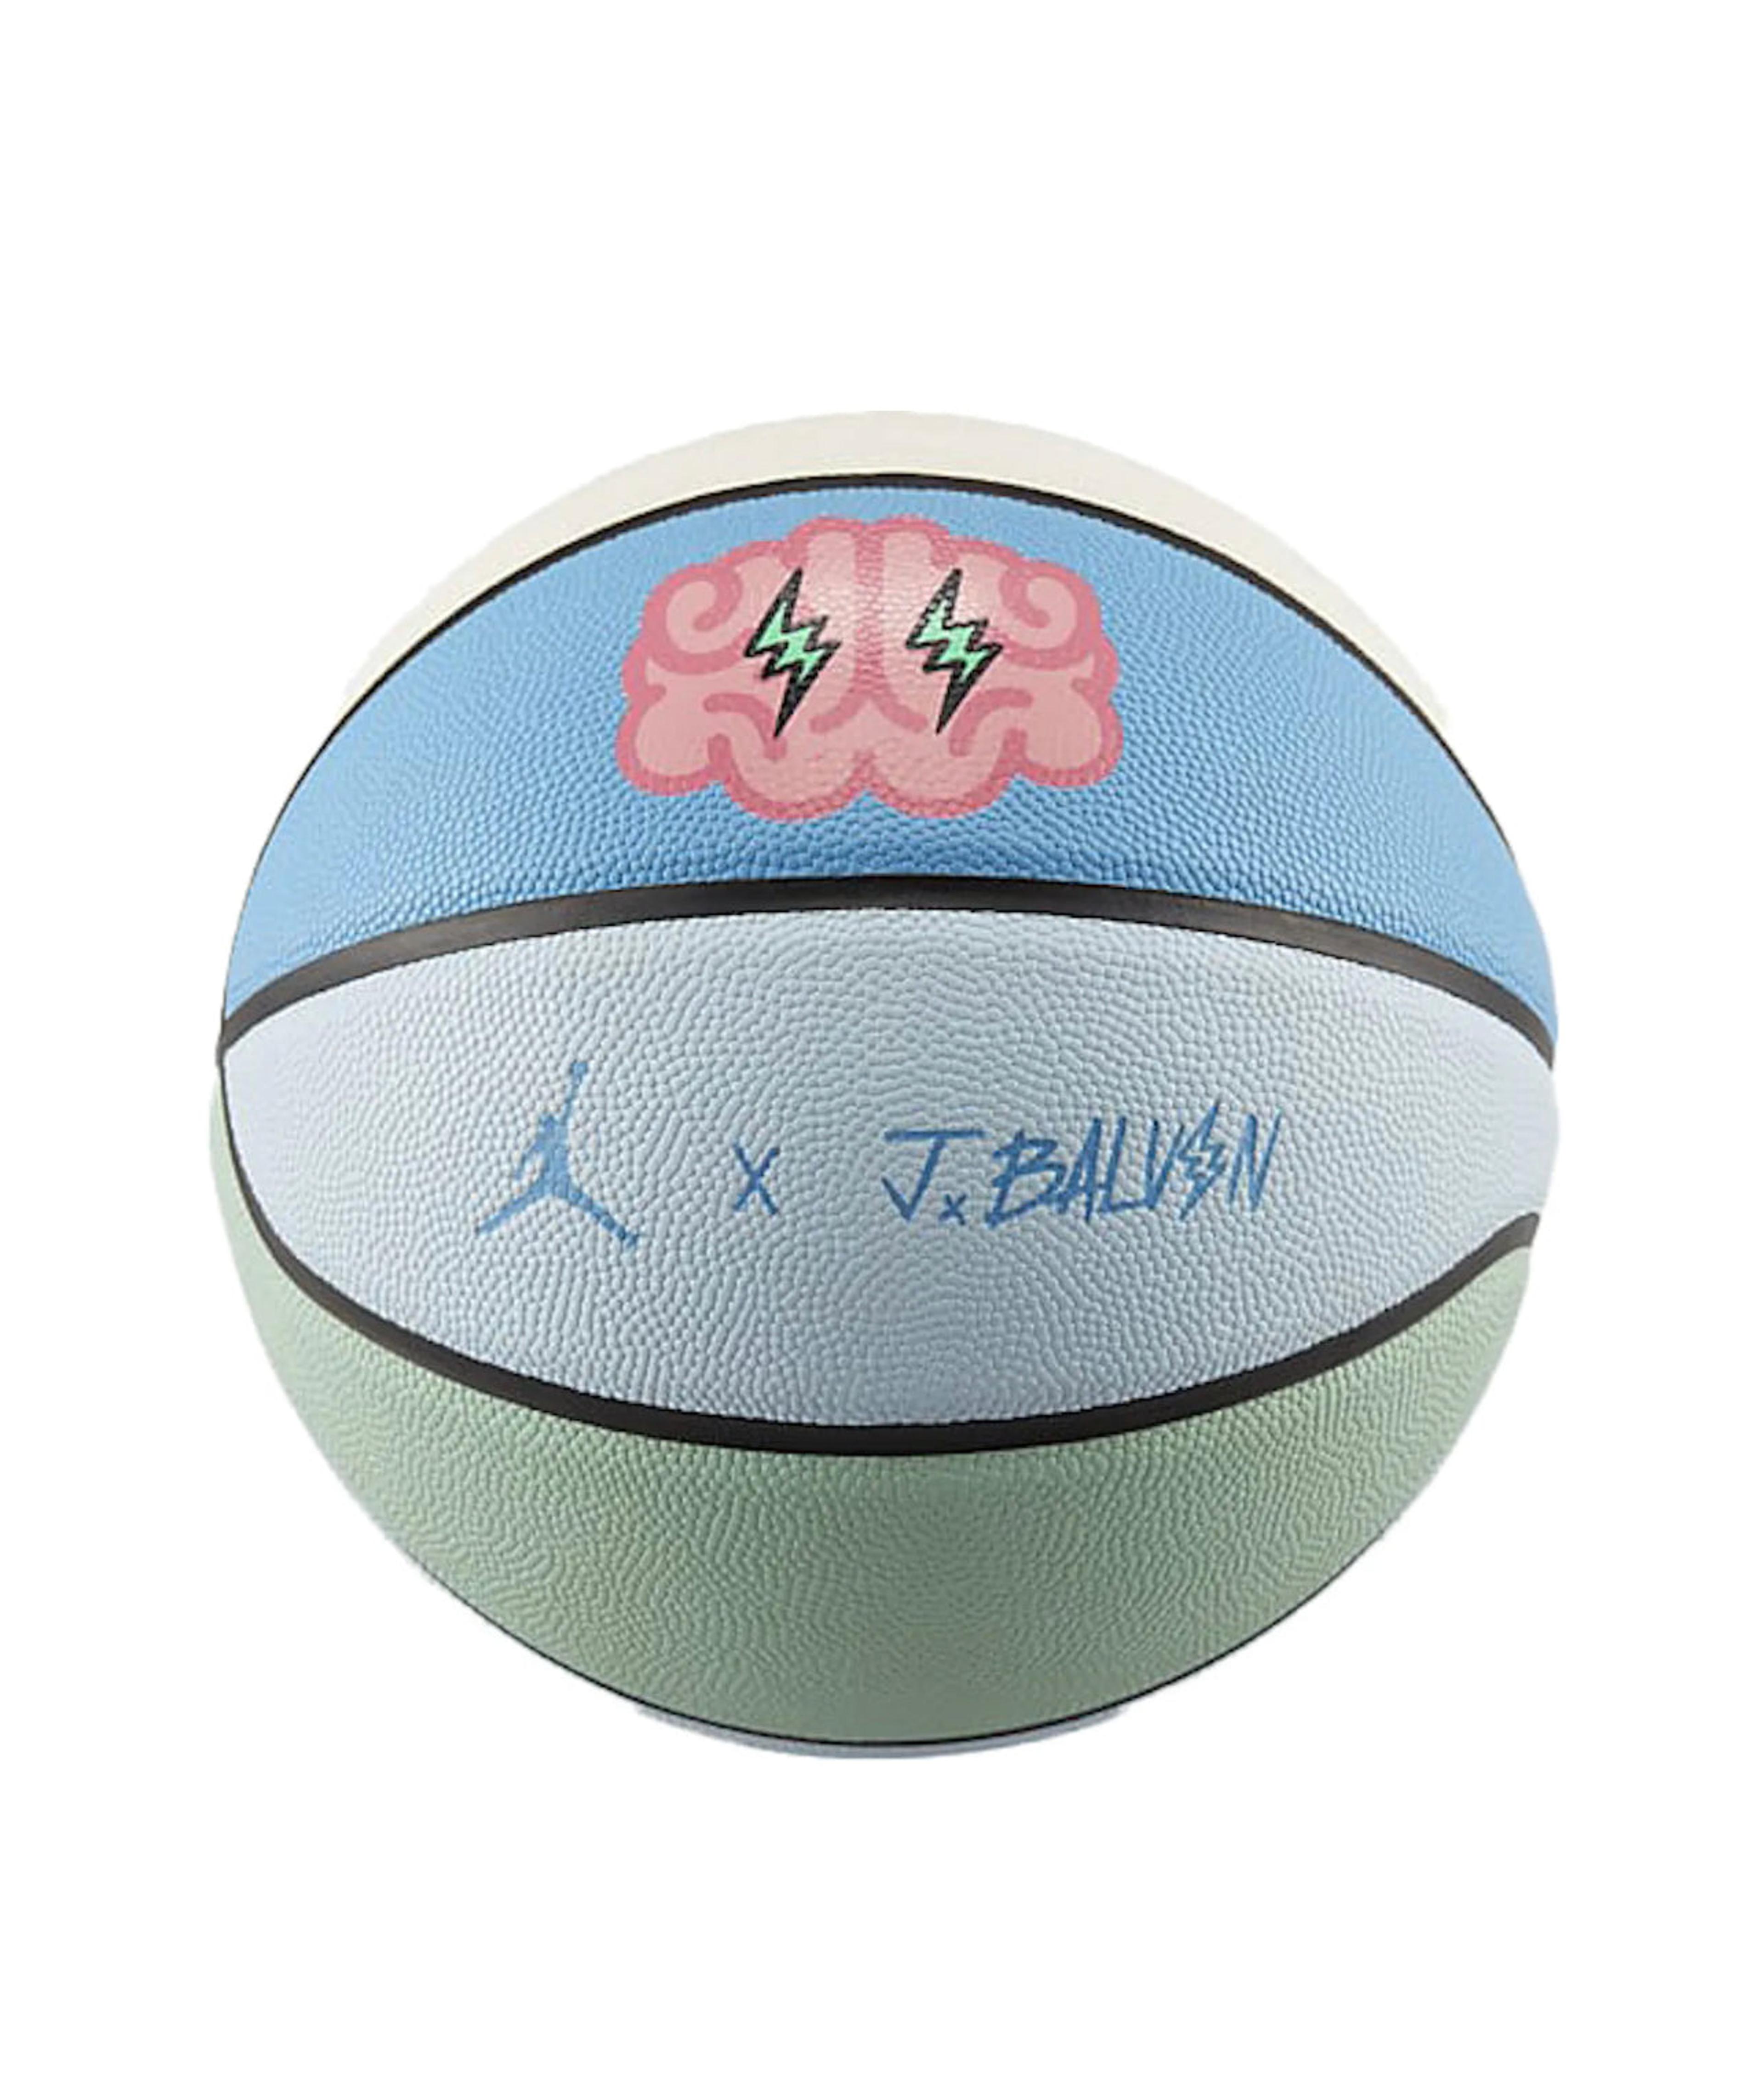 Jordan x J Balvin Everyday All Court Basketball